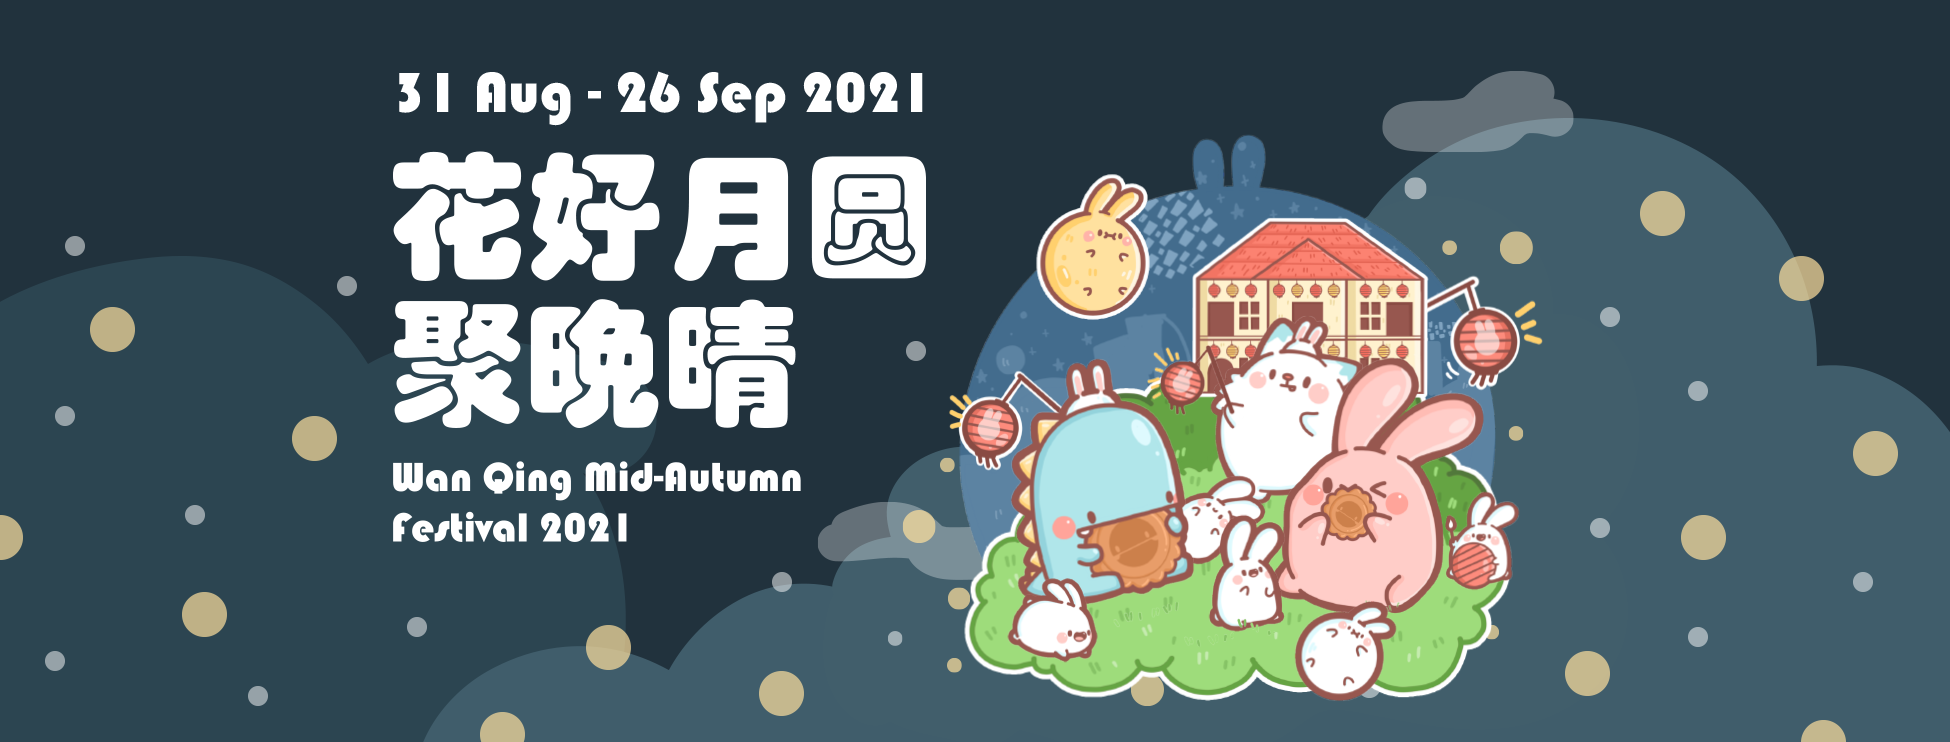 wan qing mid autumn festival 2021